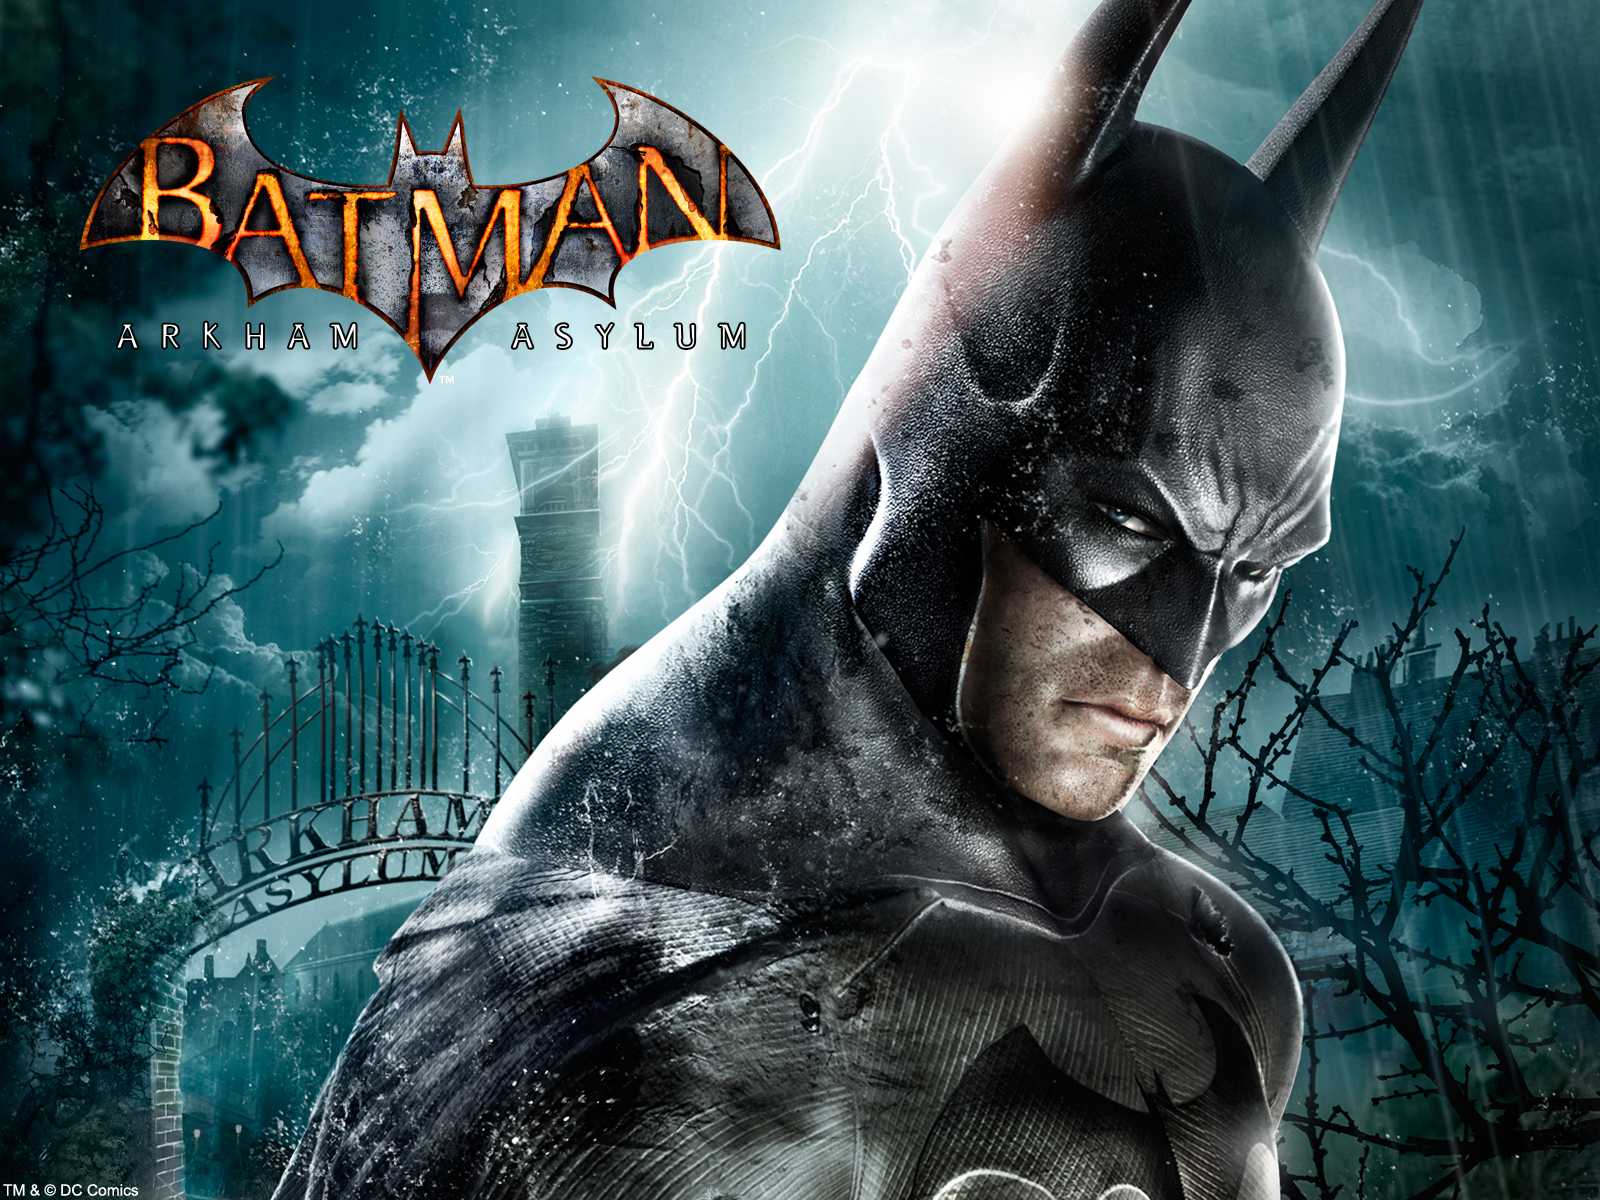  Download Batman Arkham City Asylum HD Wallpaper HD Video Game